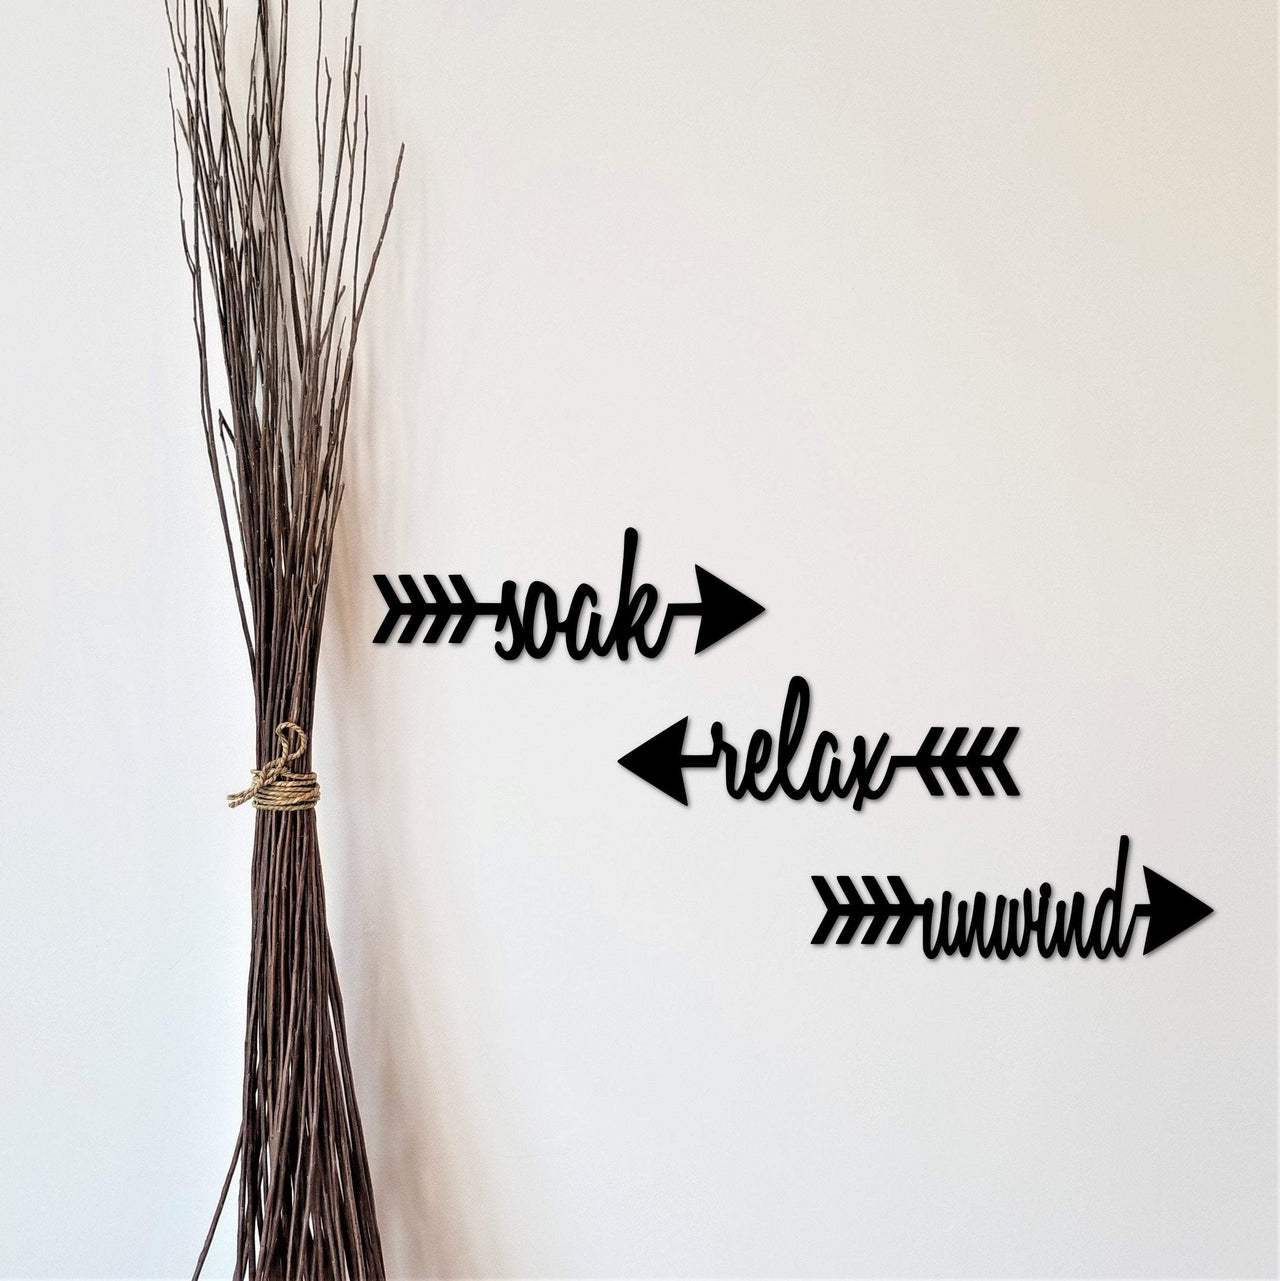 Soak Relax Unwind Sign | Arrow Decor | Bathroom Metal Wall Art Word Arrows | Guest Bathroom Gift for Her, Wife, Girlfriend, Sister, Aunt